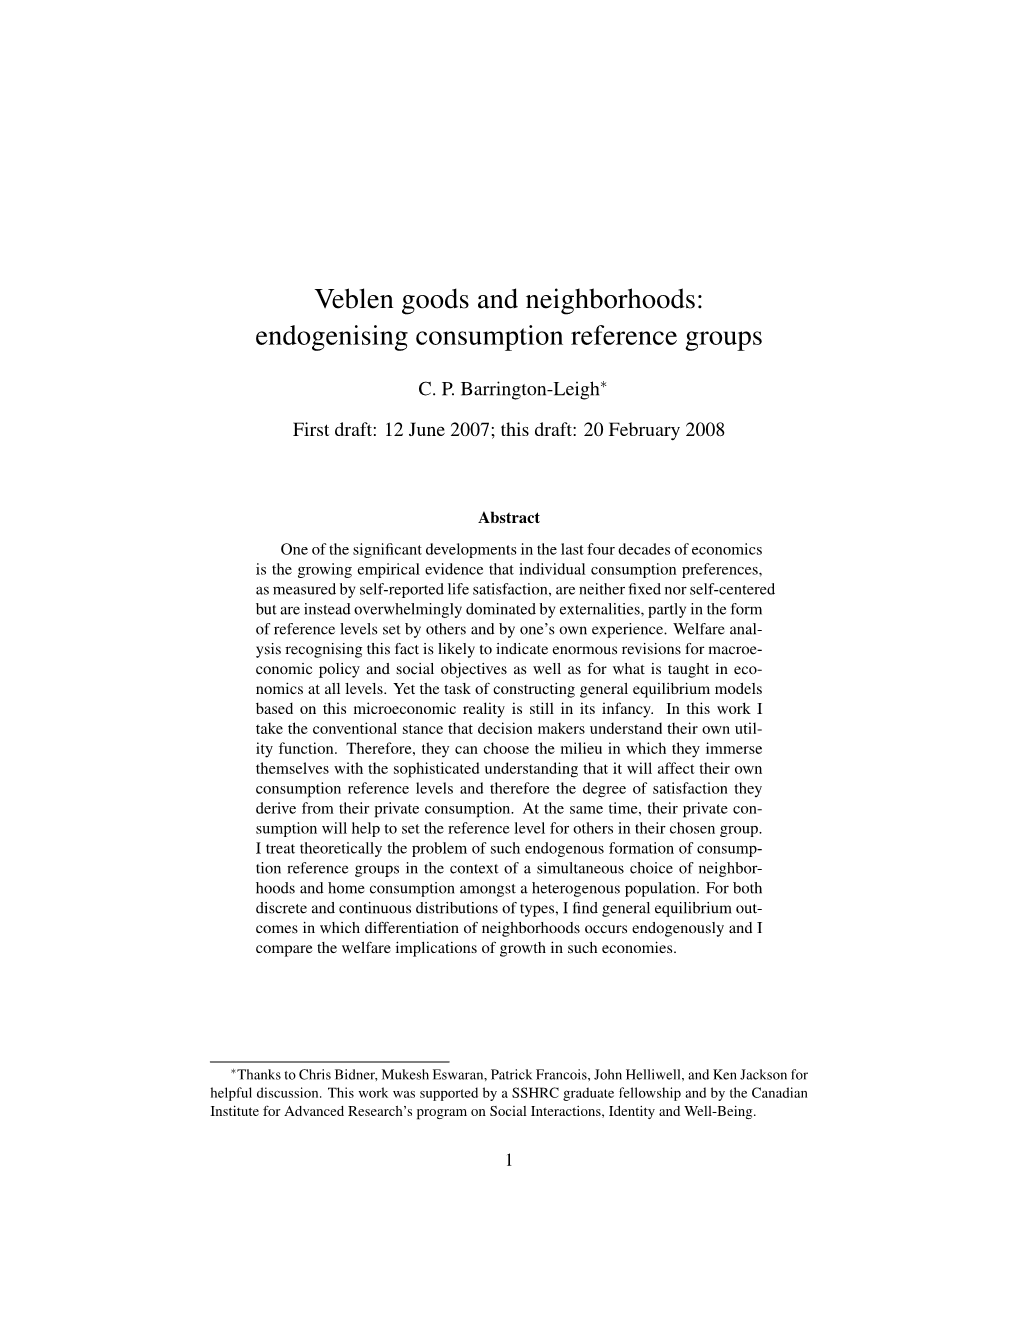 Veblen Goods and Neighborhoods: Endogenising Consumption Reference Groups